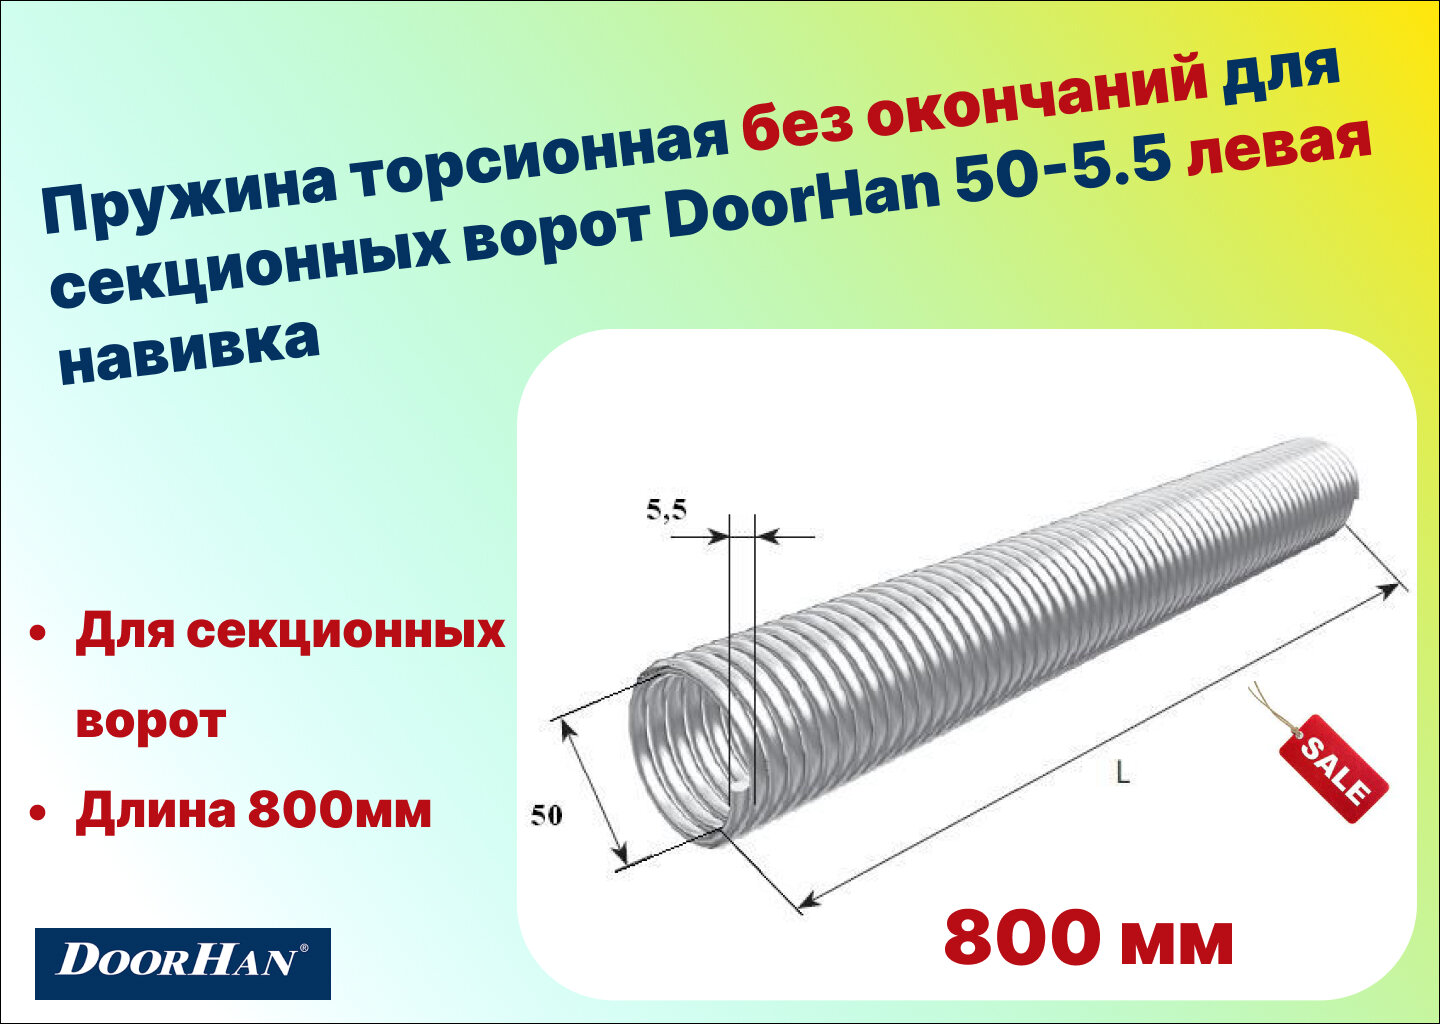 Пружина торсионная без окончаний для секционных ворот DoorHan 50-5.5 левая навивка длина 800 мм (32055/mL/RAL7004 )